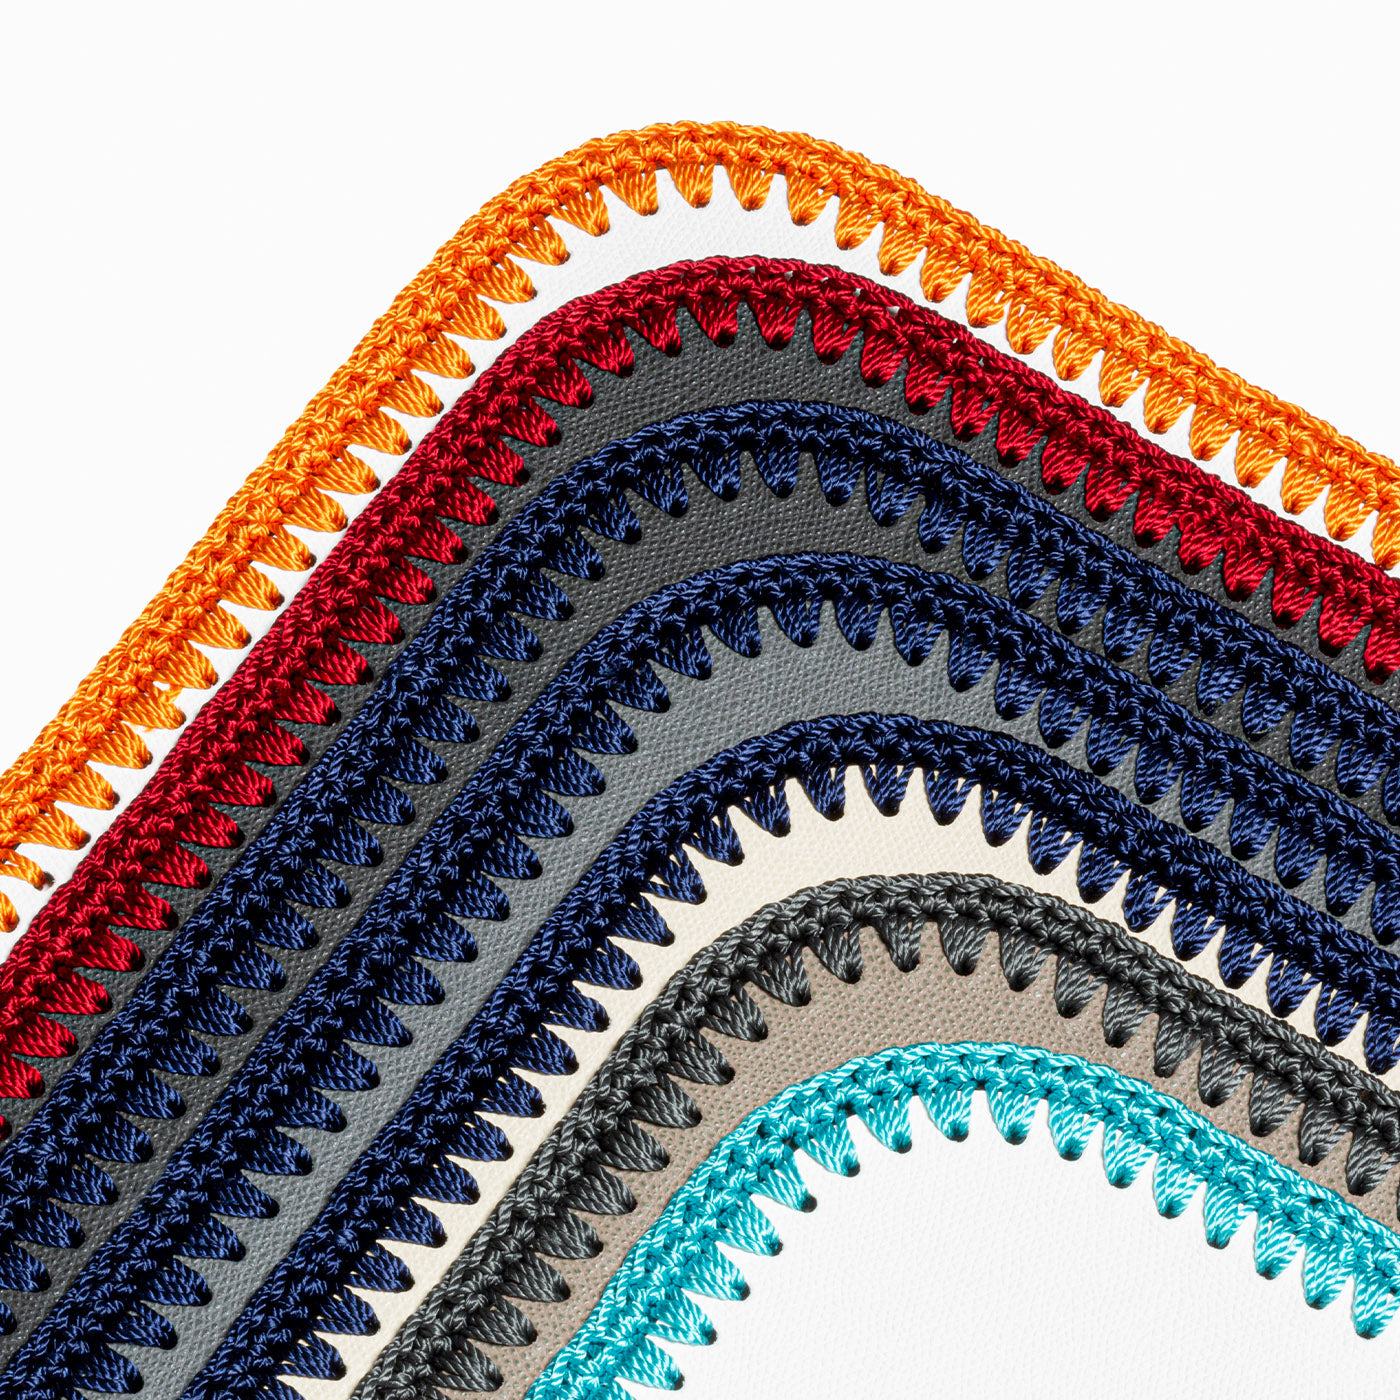 Rochelle Leather & Crochet Placemats Rectangular - Gray & Blue #1 - Alternative view 1